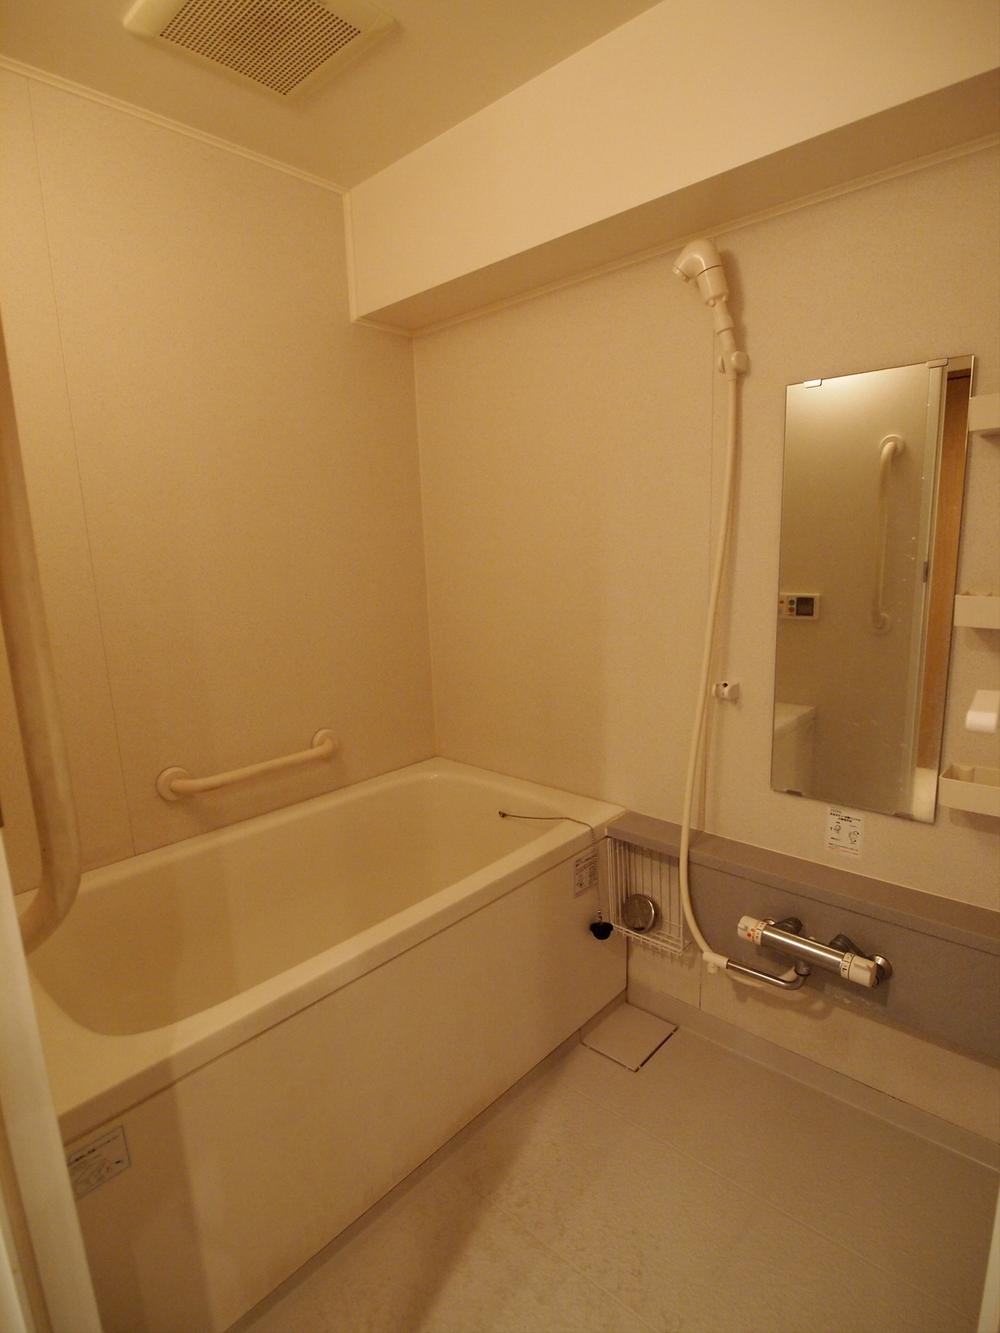 Bathroom. bathroom ・ Washroom ・ Toilet ventilation measures in the forced ventilation system ◎